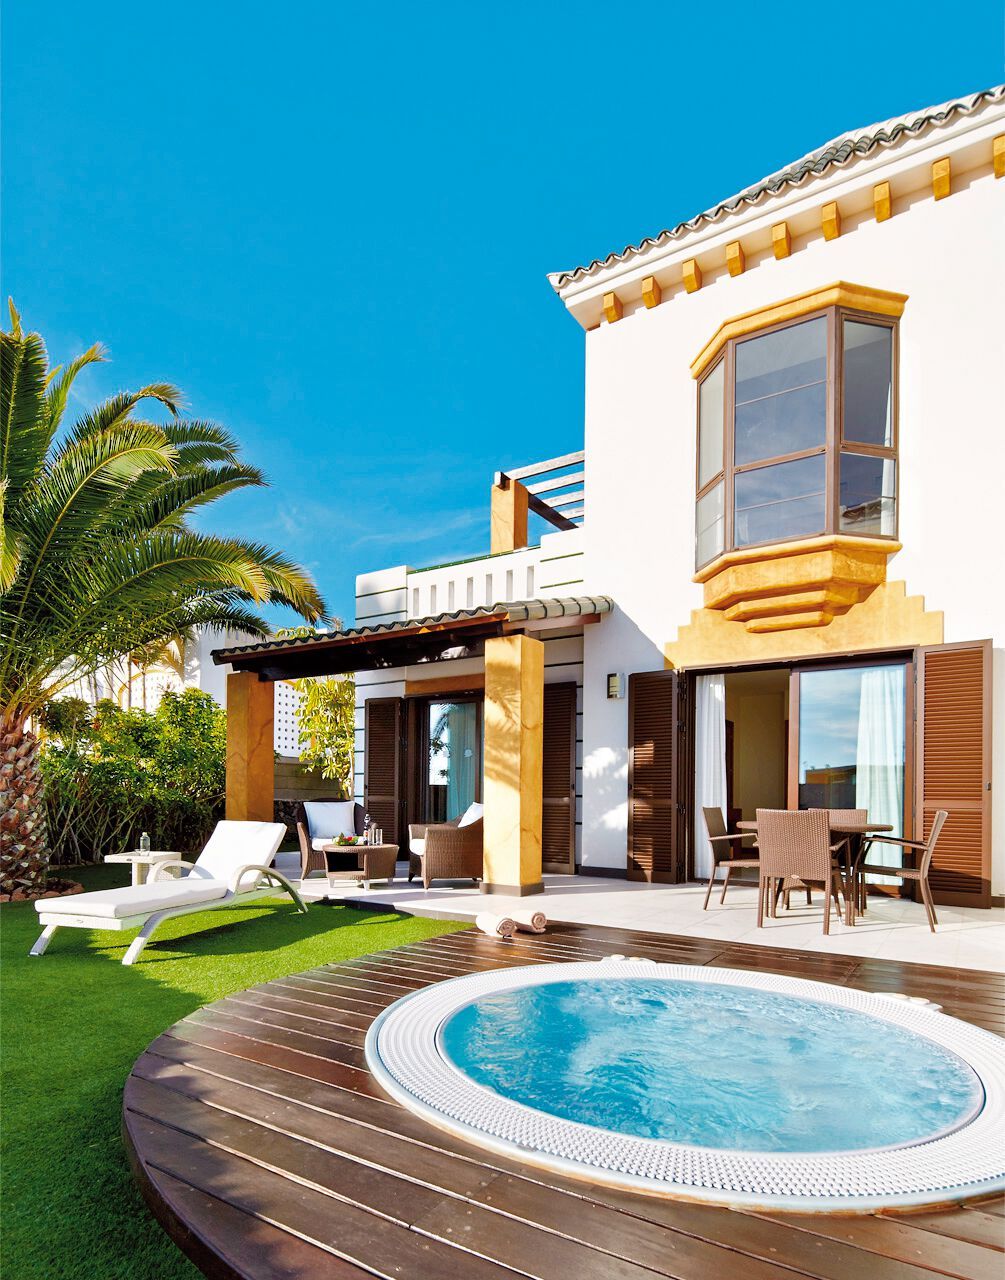 Canaries - Tenerife - Espagne - Suite Villa Maria Hotel 5*